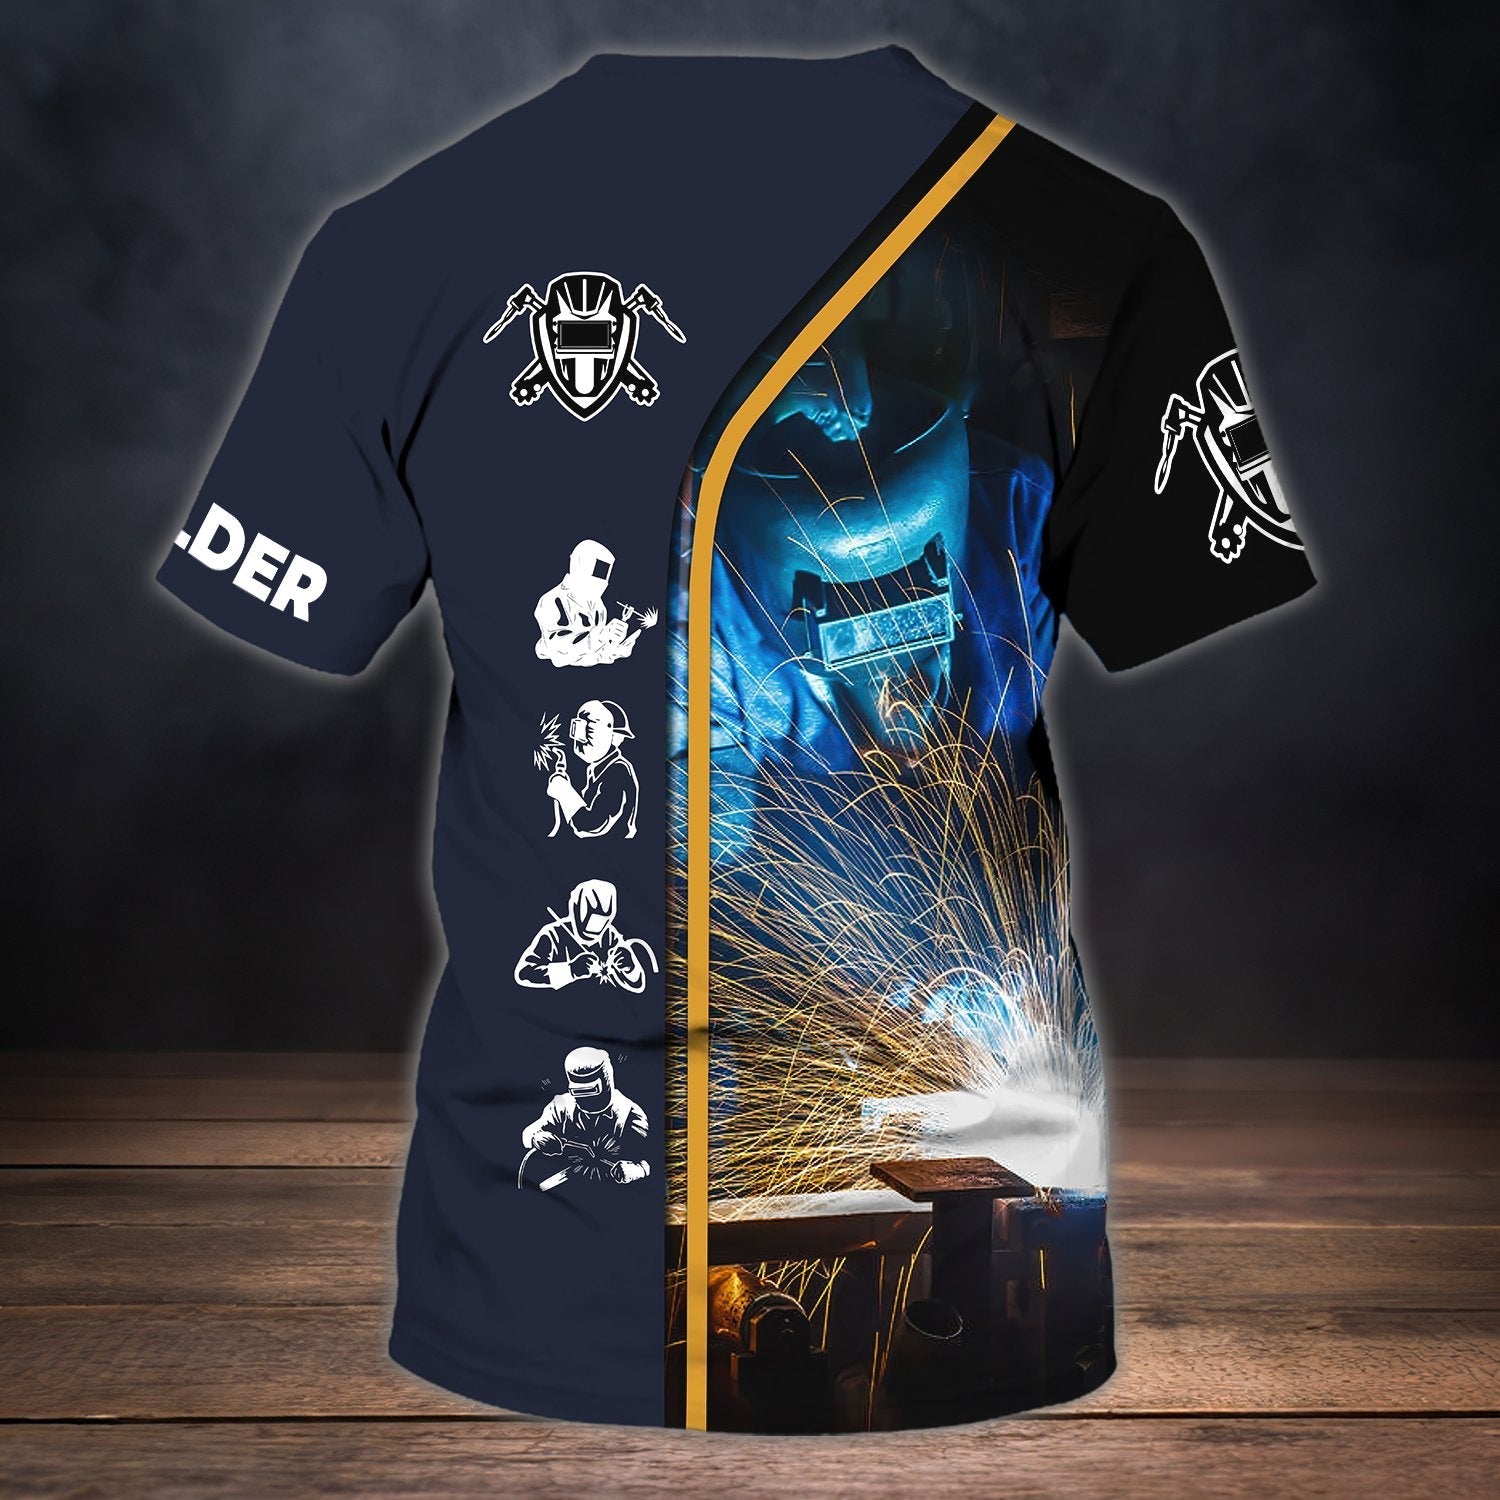 Personalized Cool Welder T Shirt/ 3D All Over Printed Best Shirts For Welder/ Welding Shirt